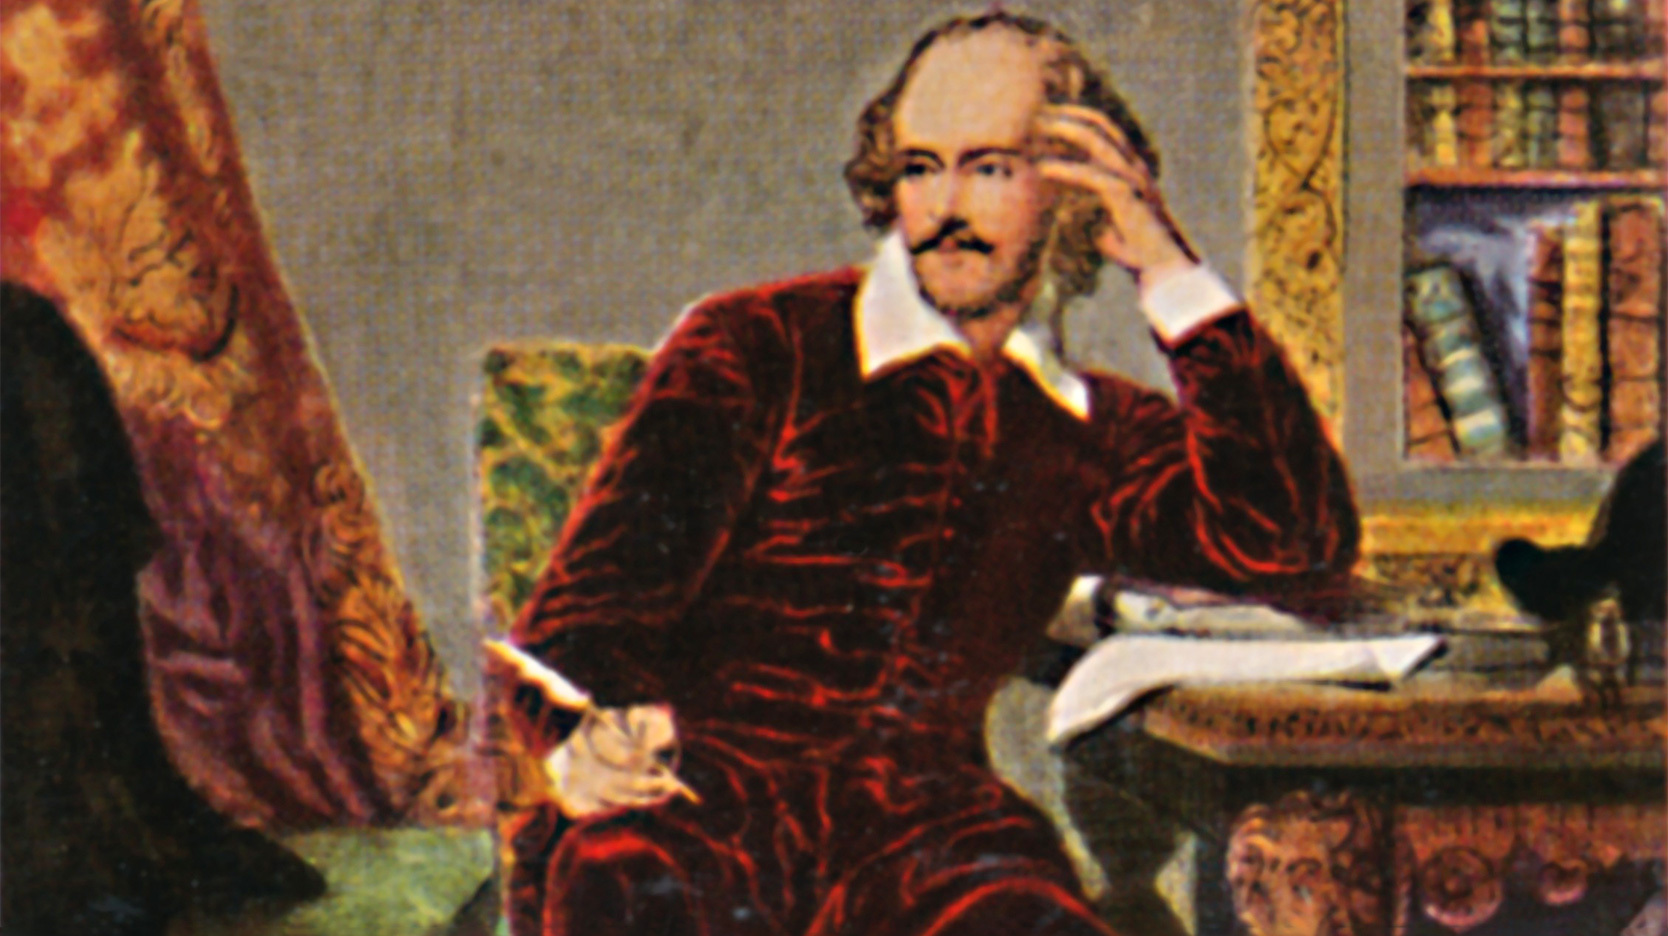 William Shakespeare writing at desk